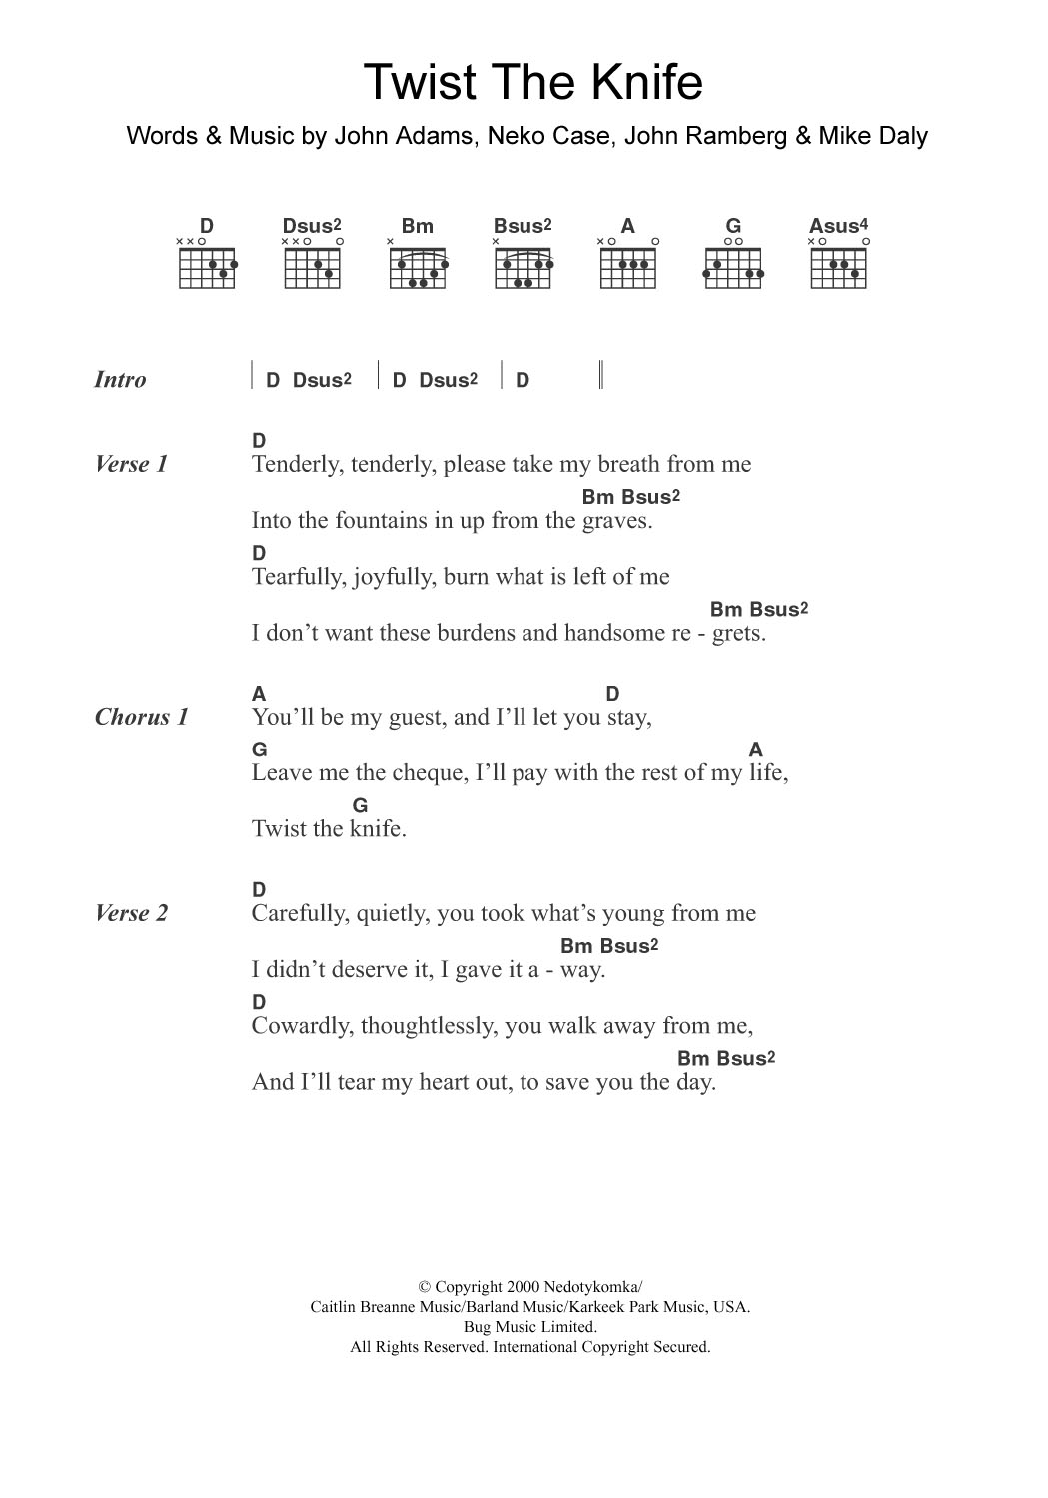 Neko Case & Her Boyfriends Twist The Knife Sheet Music Notes & Chords for Guitar Chords/Lyrics - Download or Print PDF